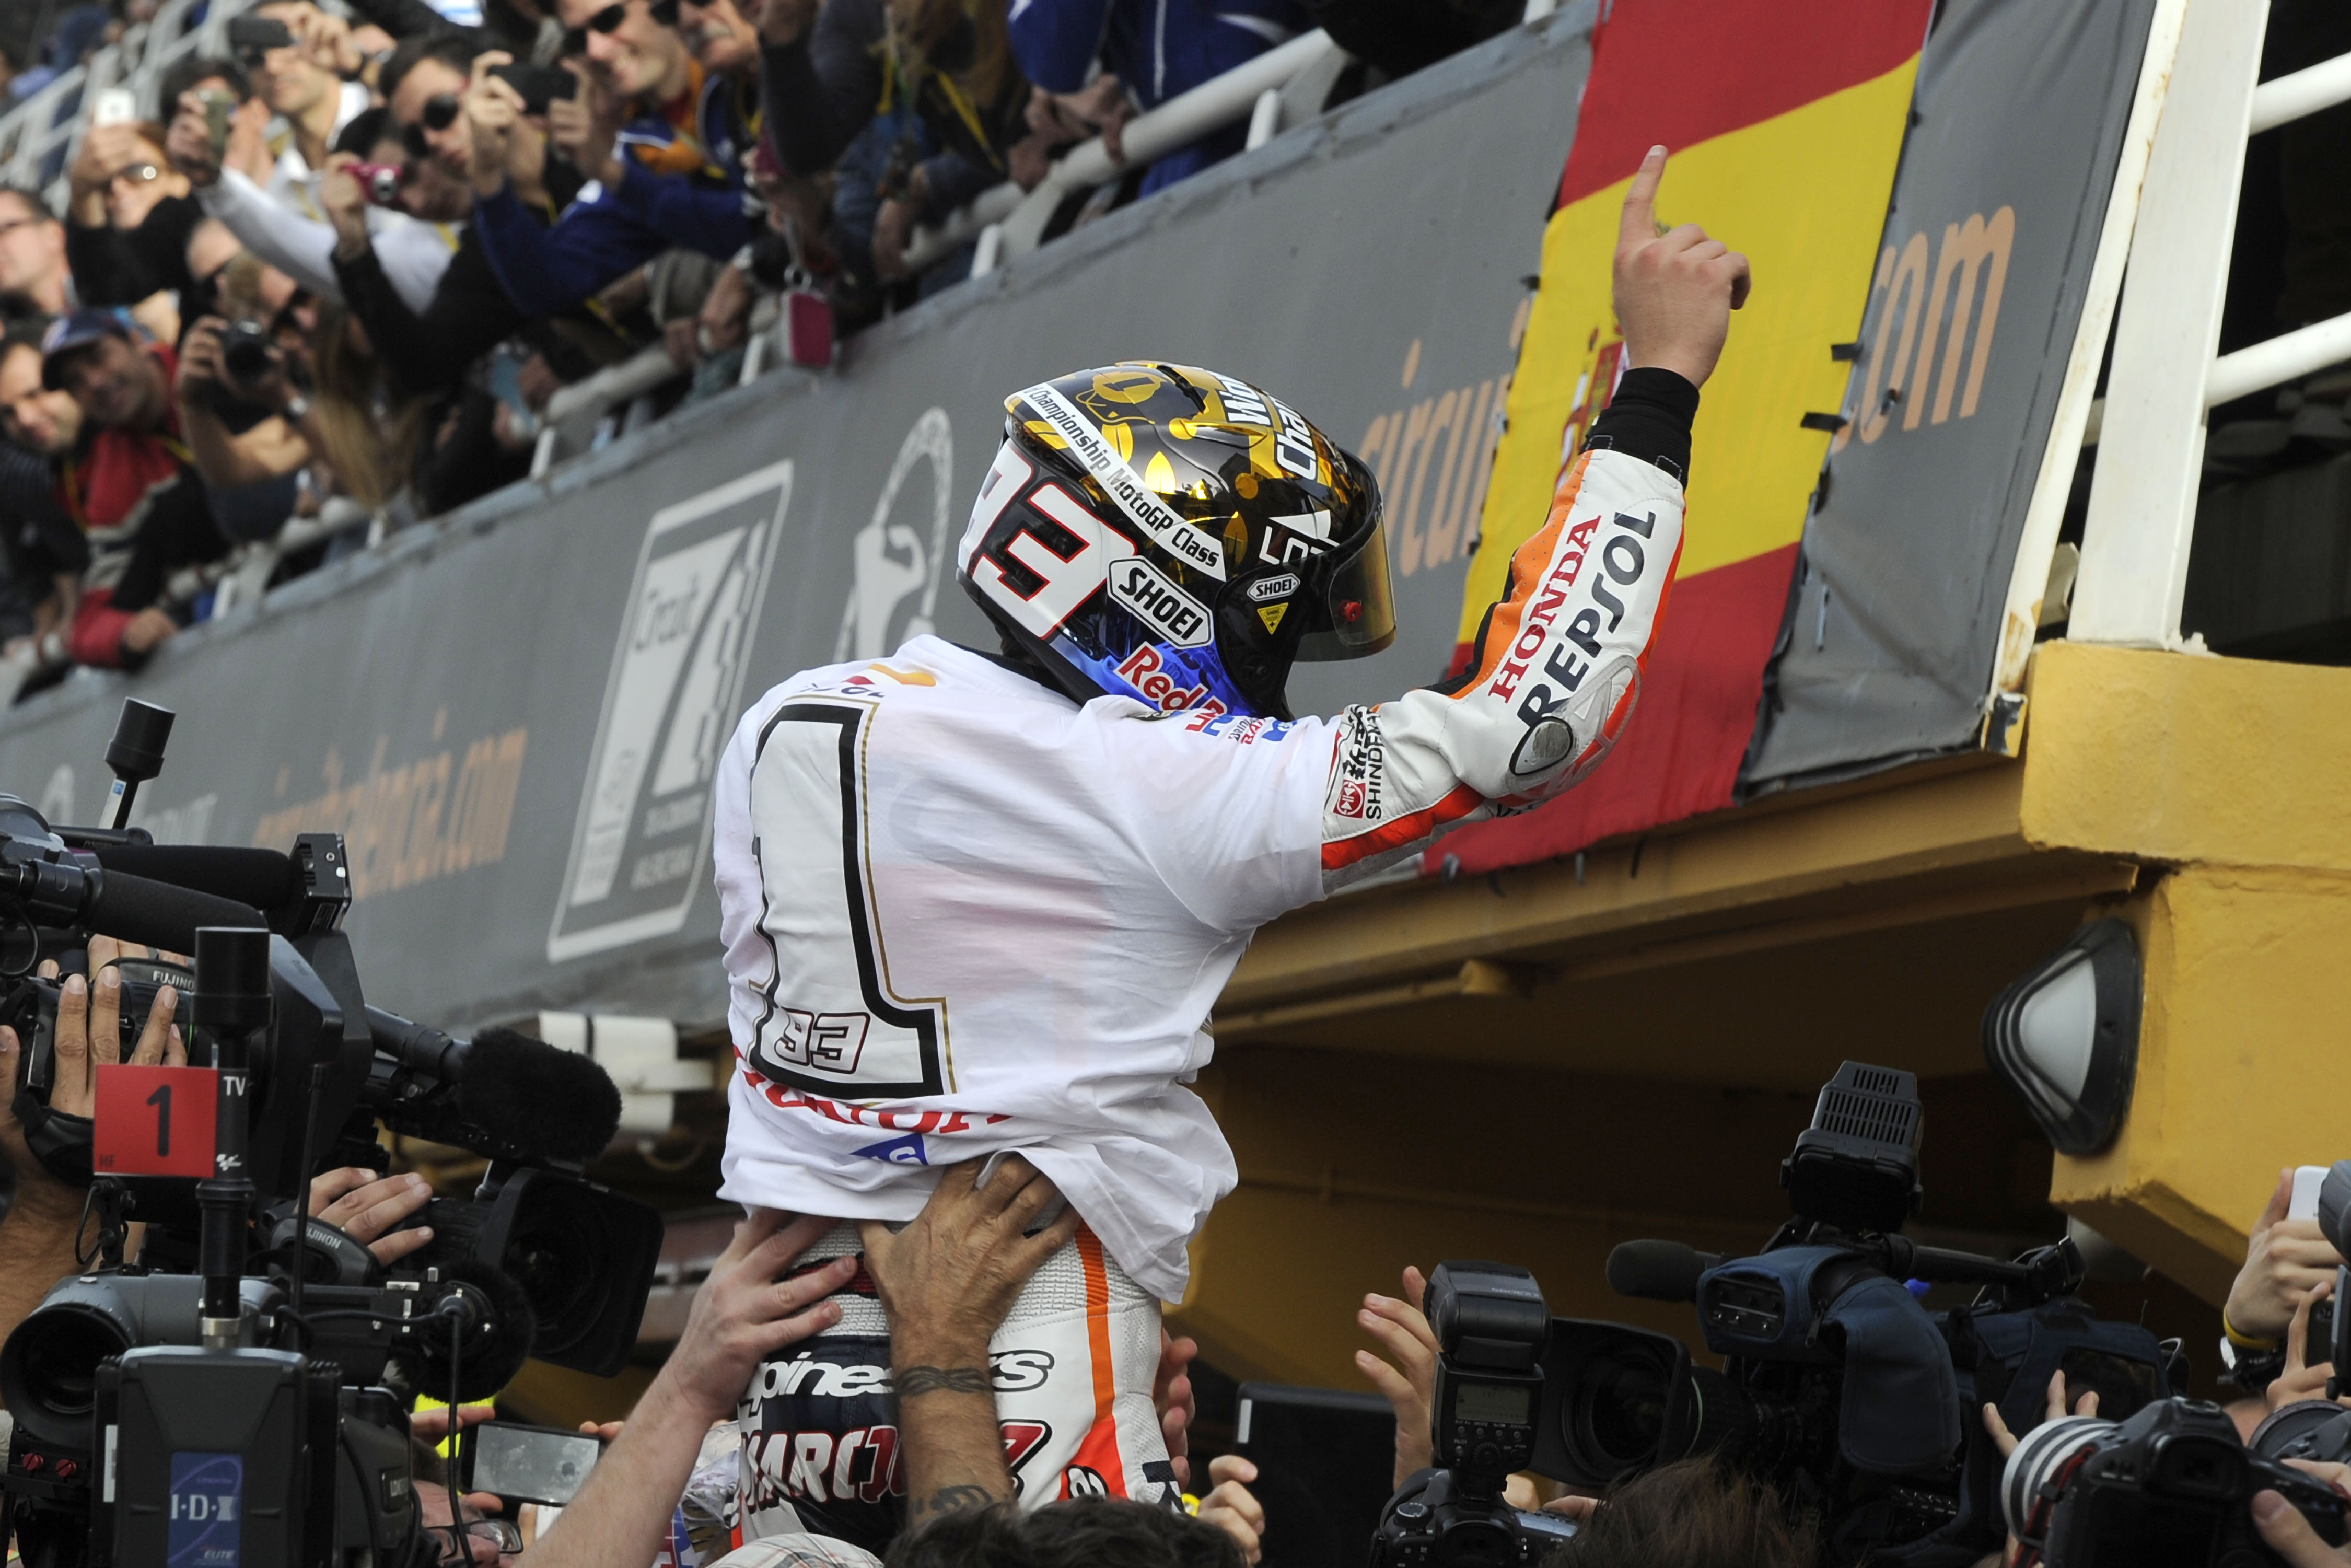 Marquez becomes youngest MotoGP World Champion